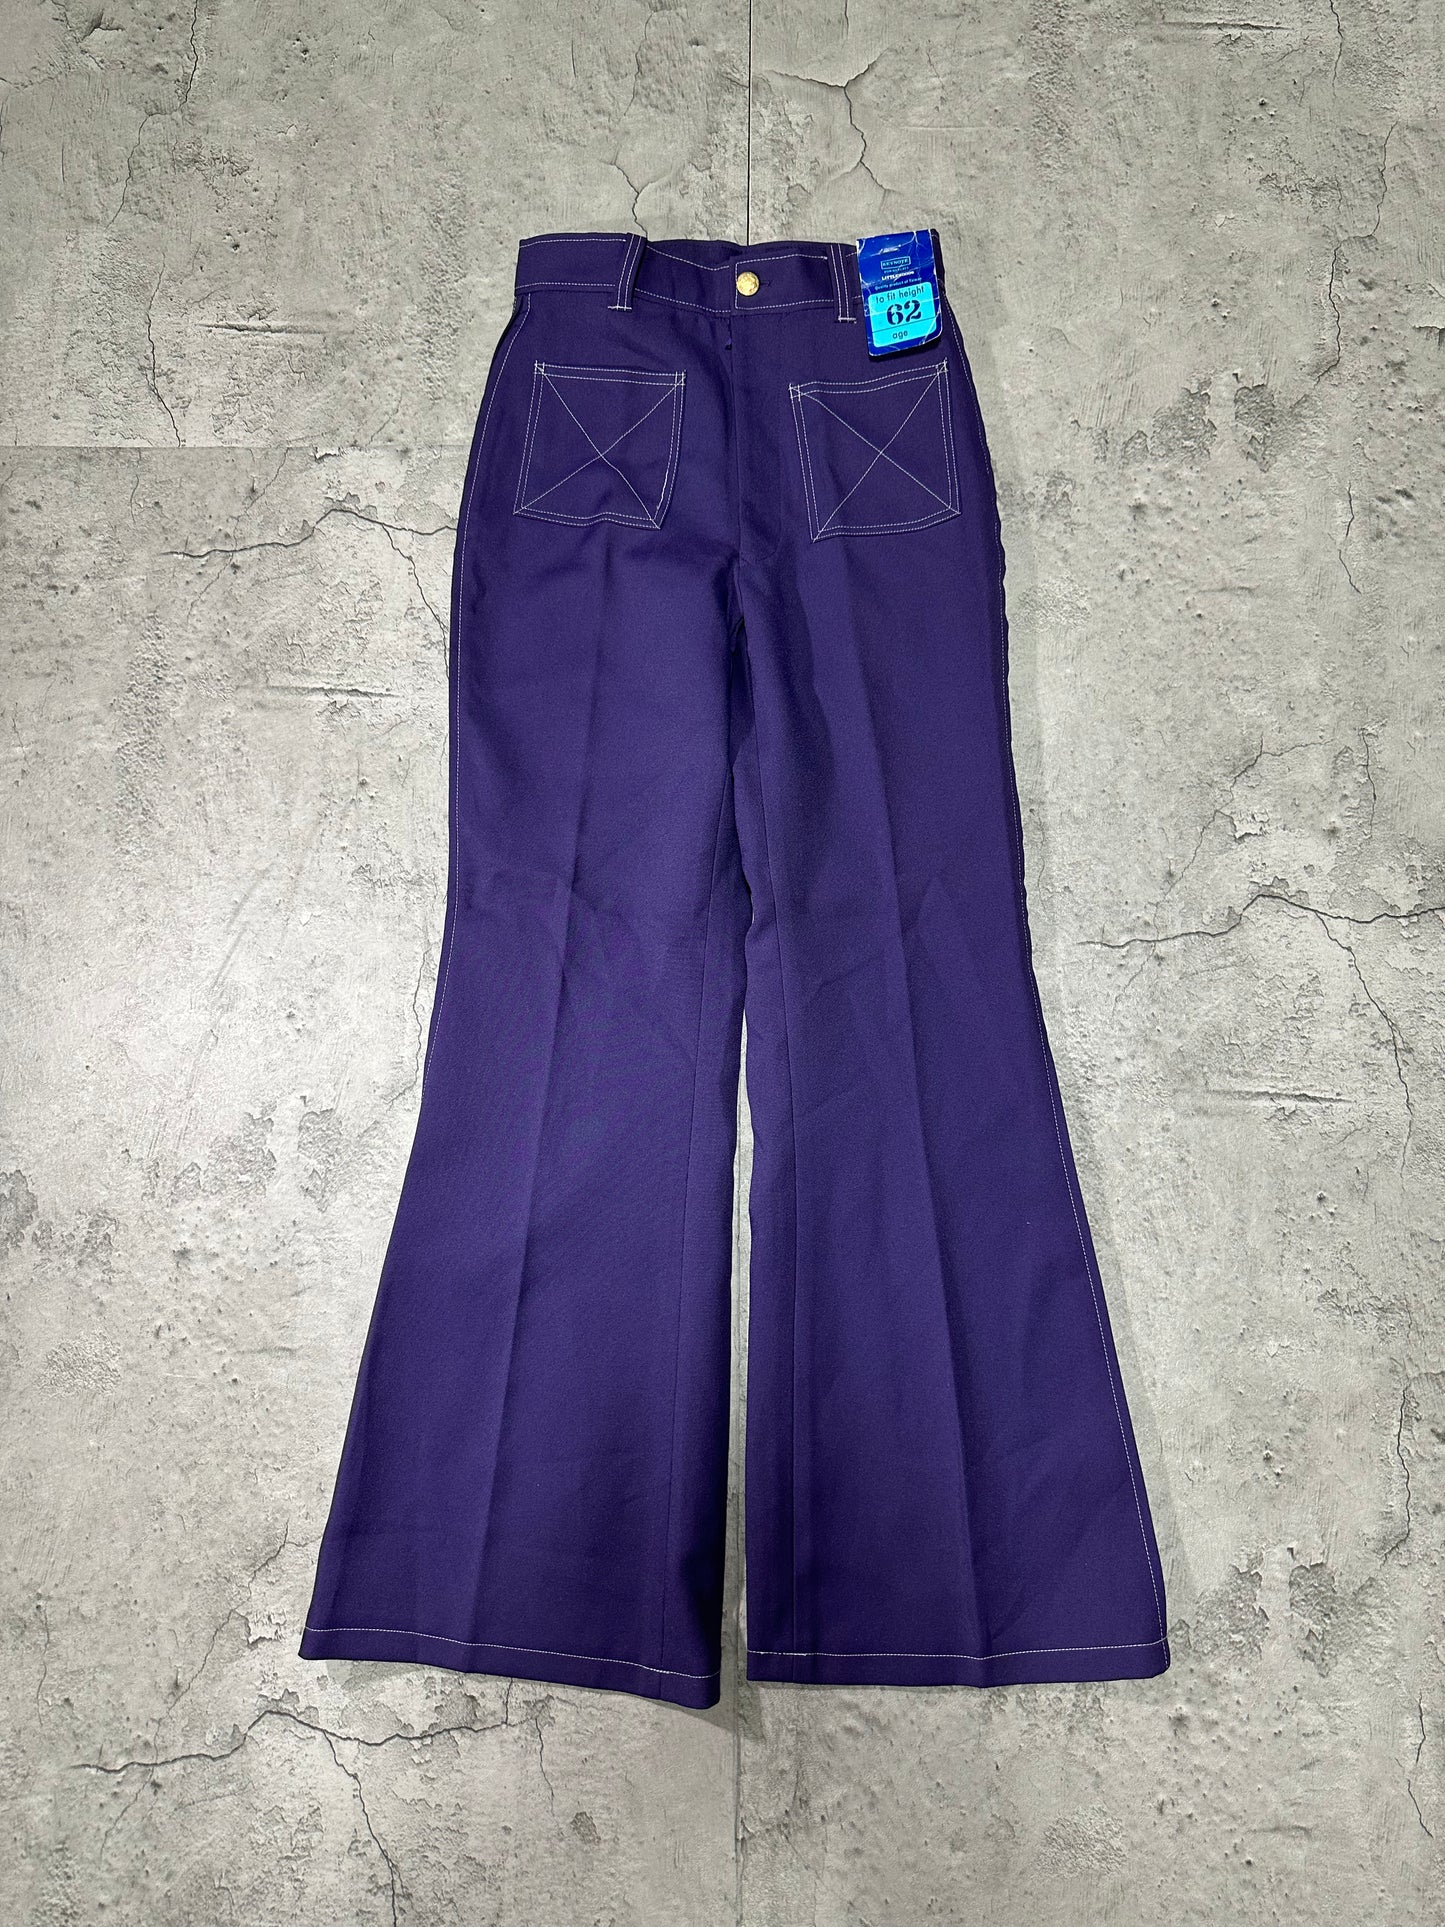 dead stock flare pants vintage 70~80s